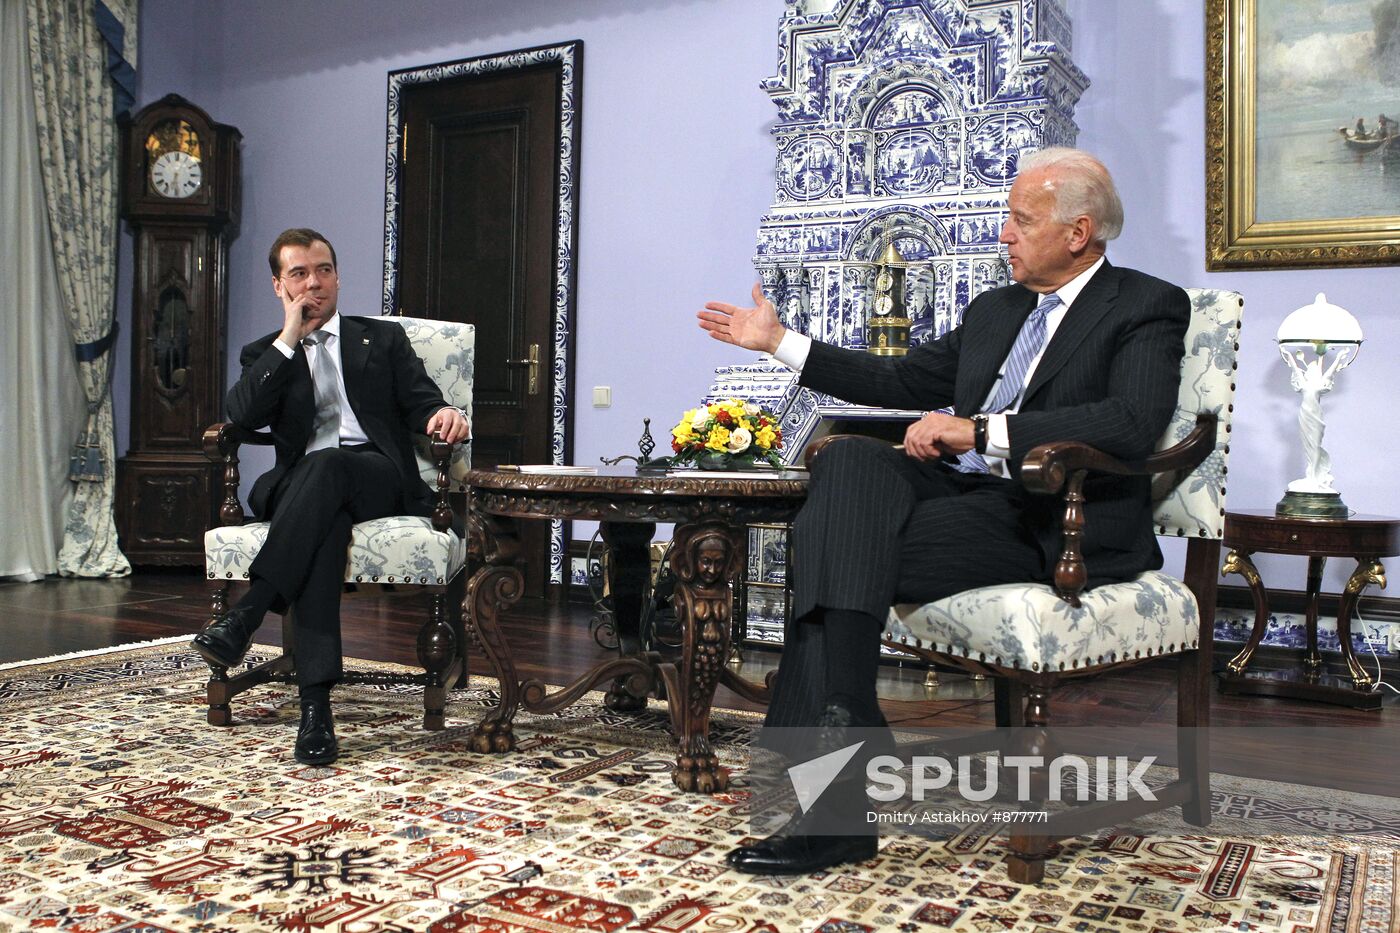 Dmitry Medvedev meets with Joe Biden at Gorki residence